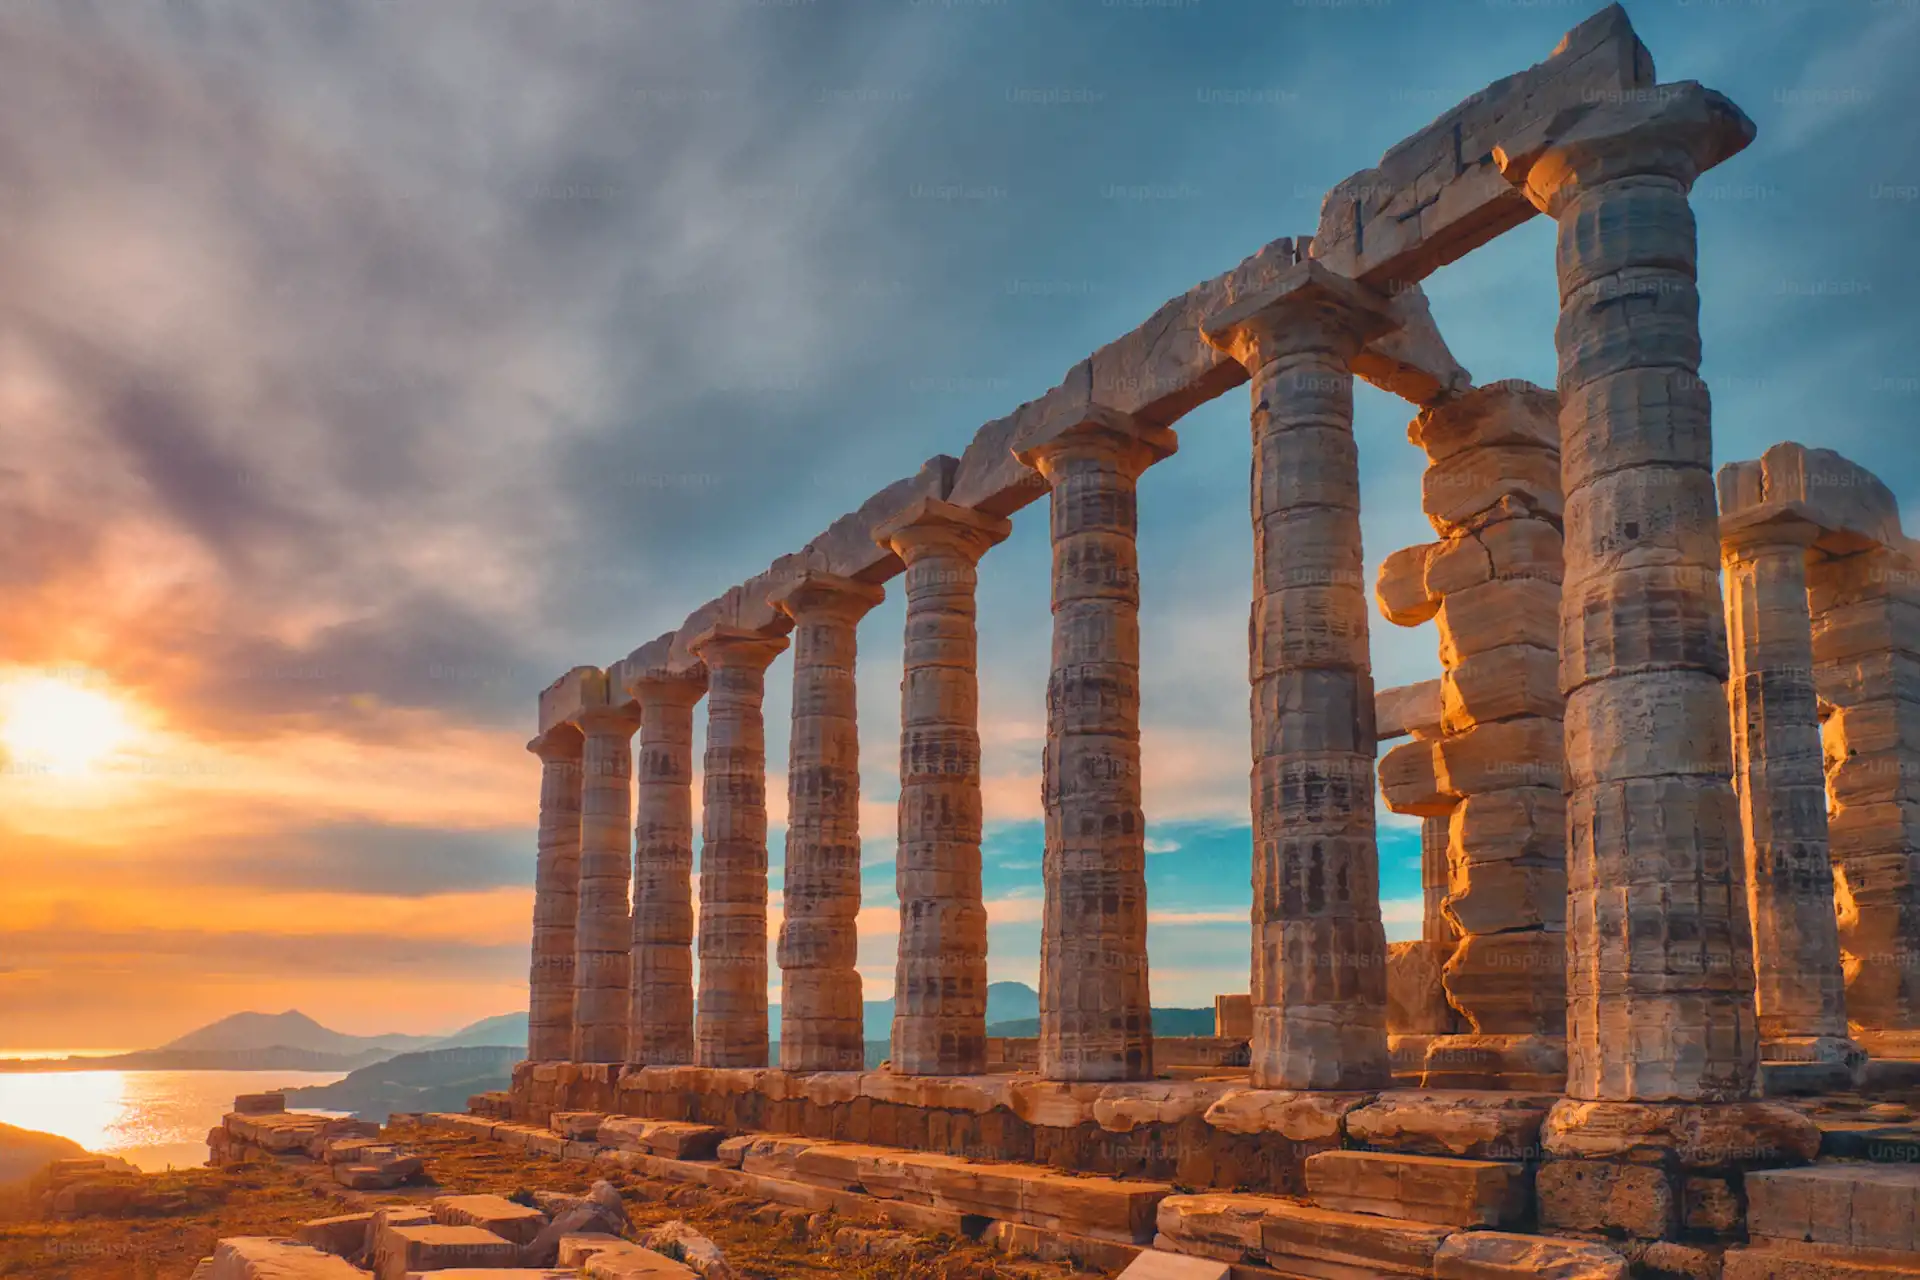 Grécia: Atenas e Ilhas Gregas